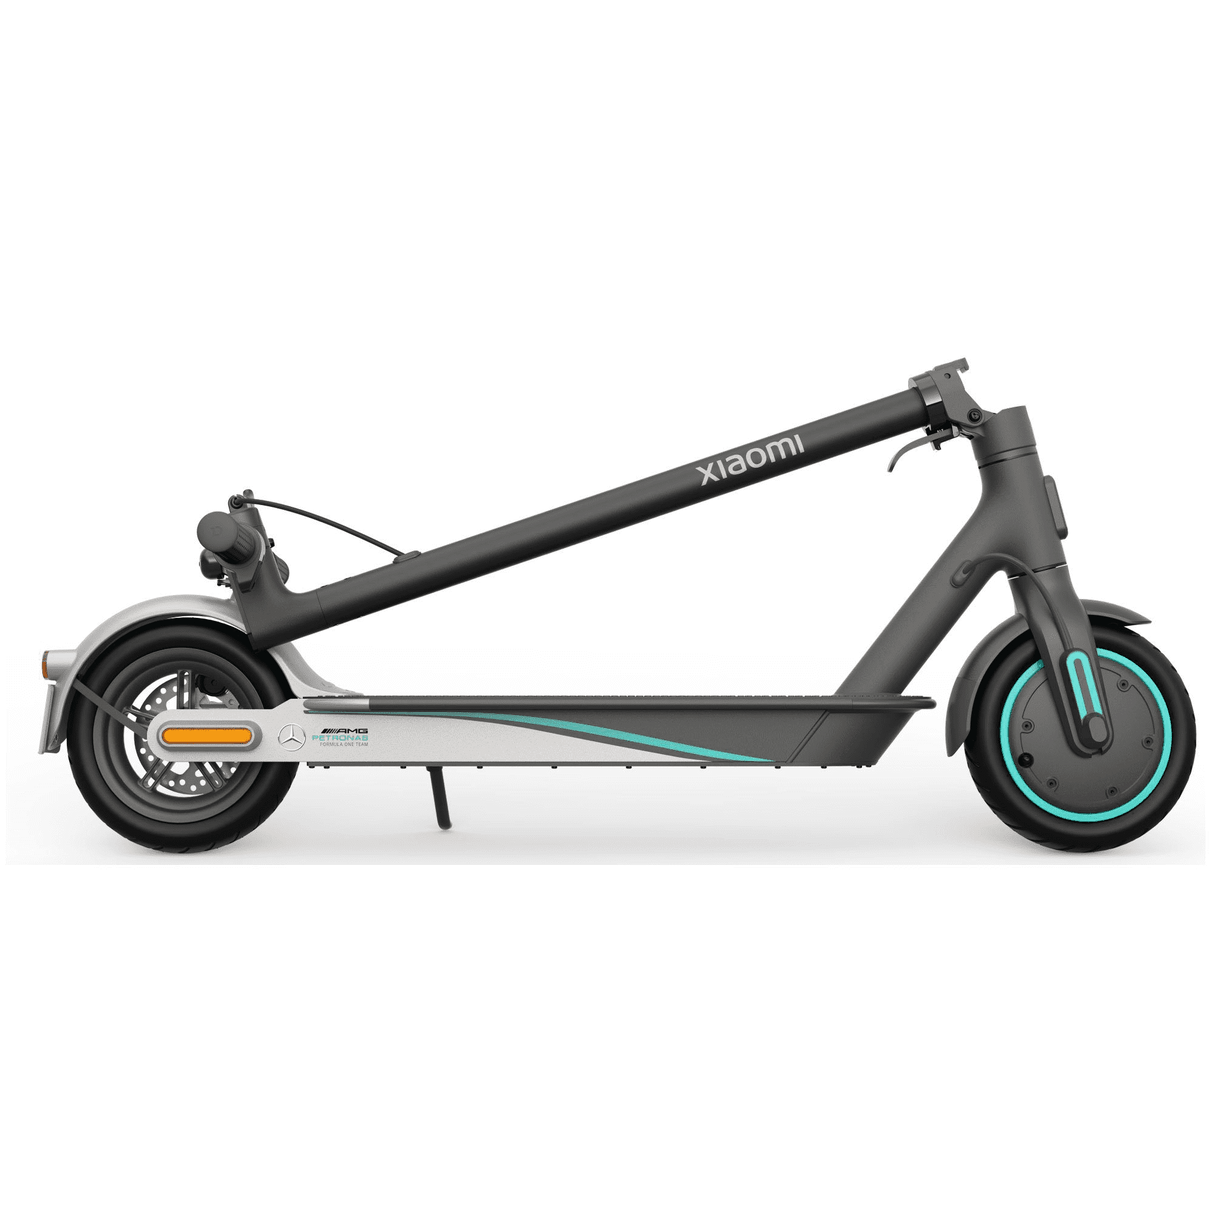 Mi Electric Scooter Pro 2 Mercedes-AMG Petronas F1 Team Edition